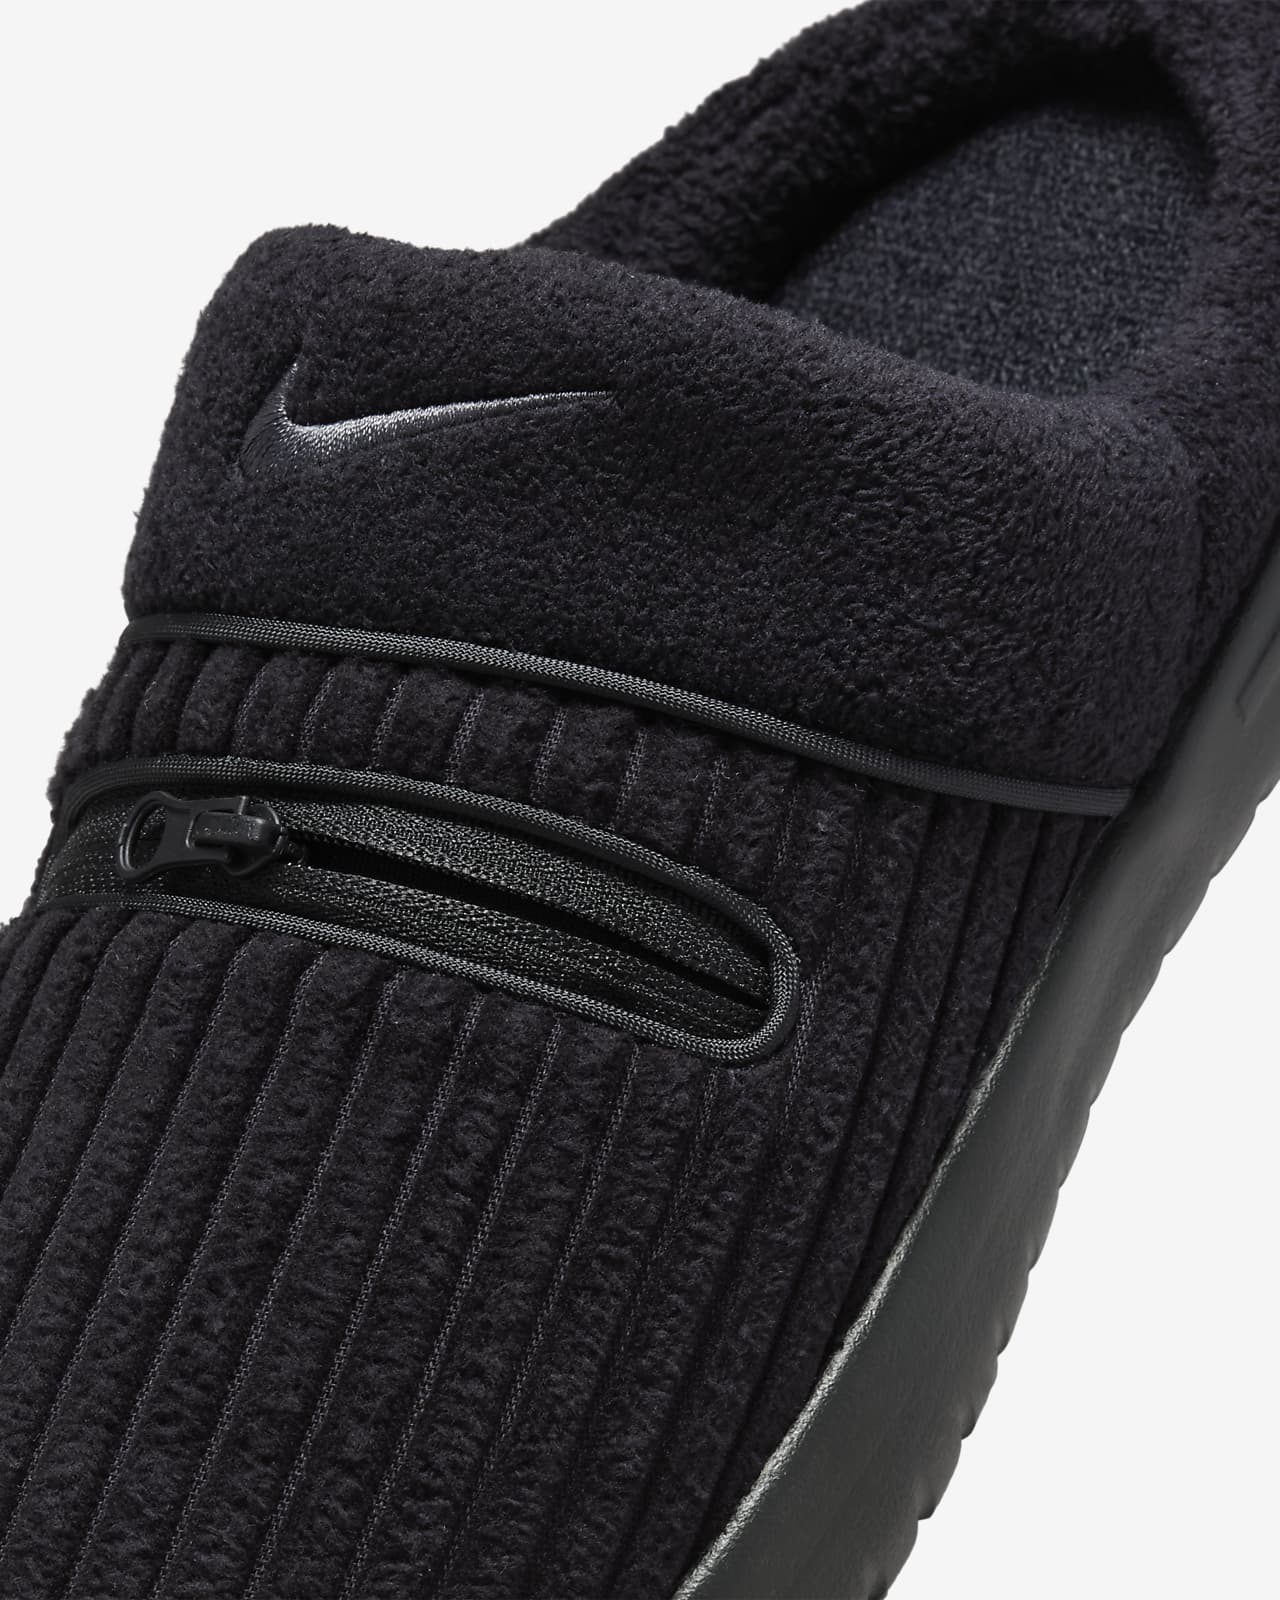 Nike Black Thong Slippers - Buy Nike Black Thong Slippers online in India